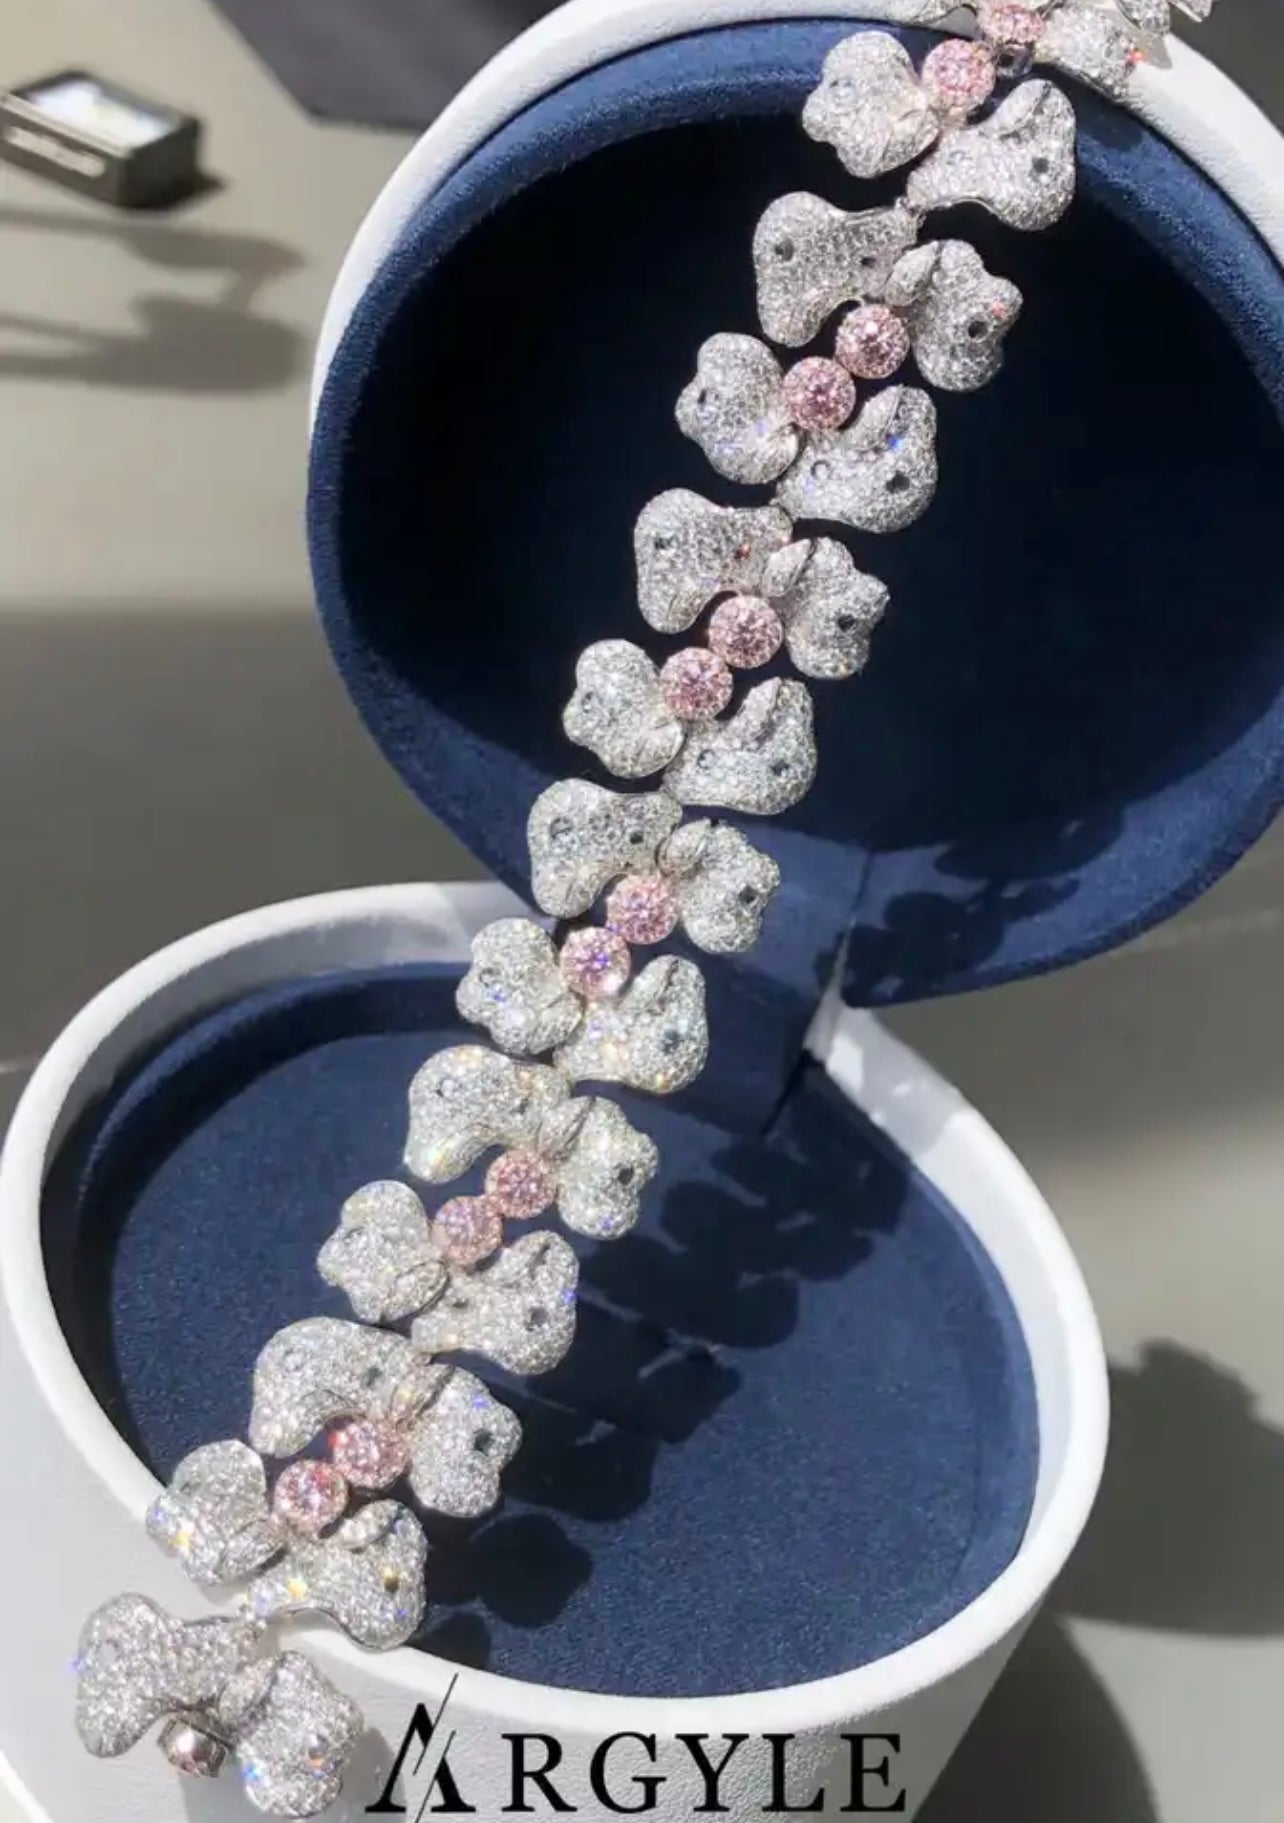 15 Carat Argyle Fancy Intense Pink Brilliant Round Cut Diamond Bracelet Solid 18K WG